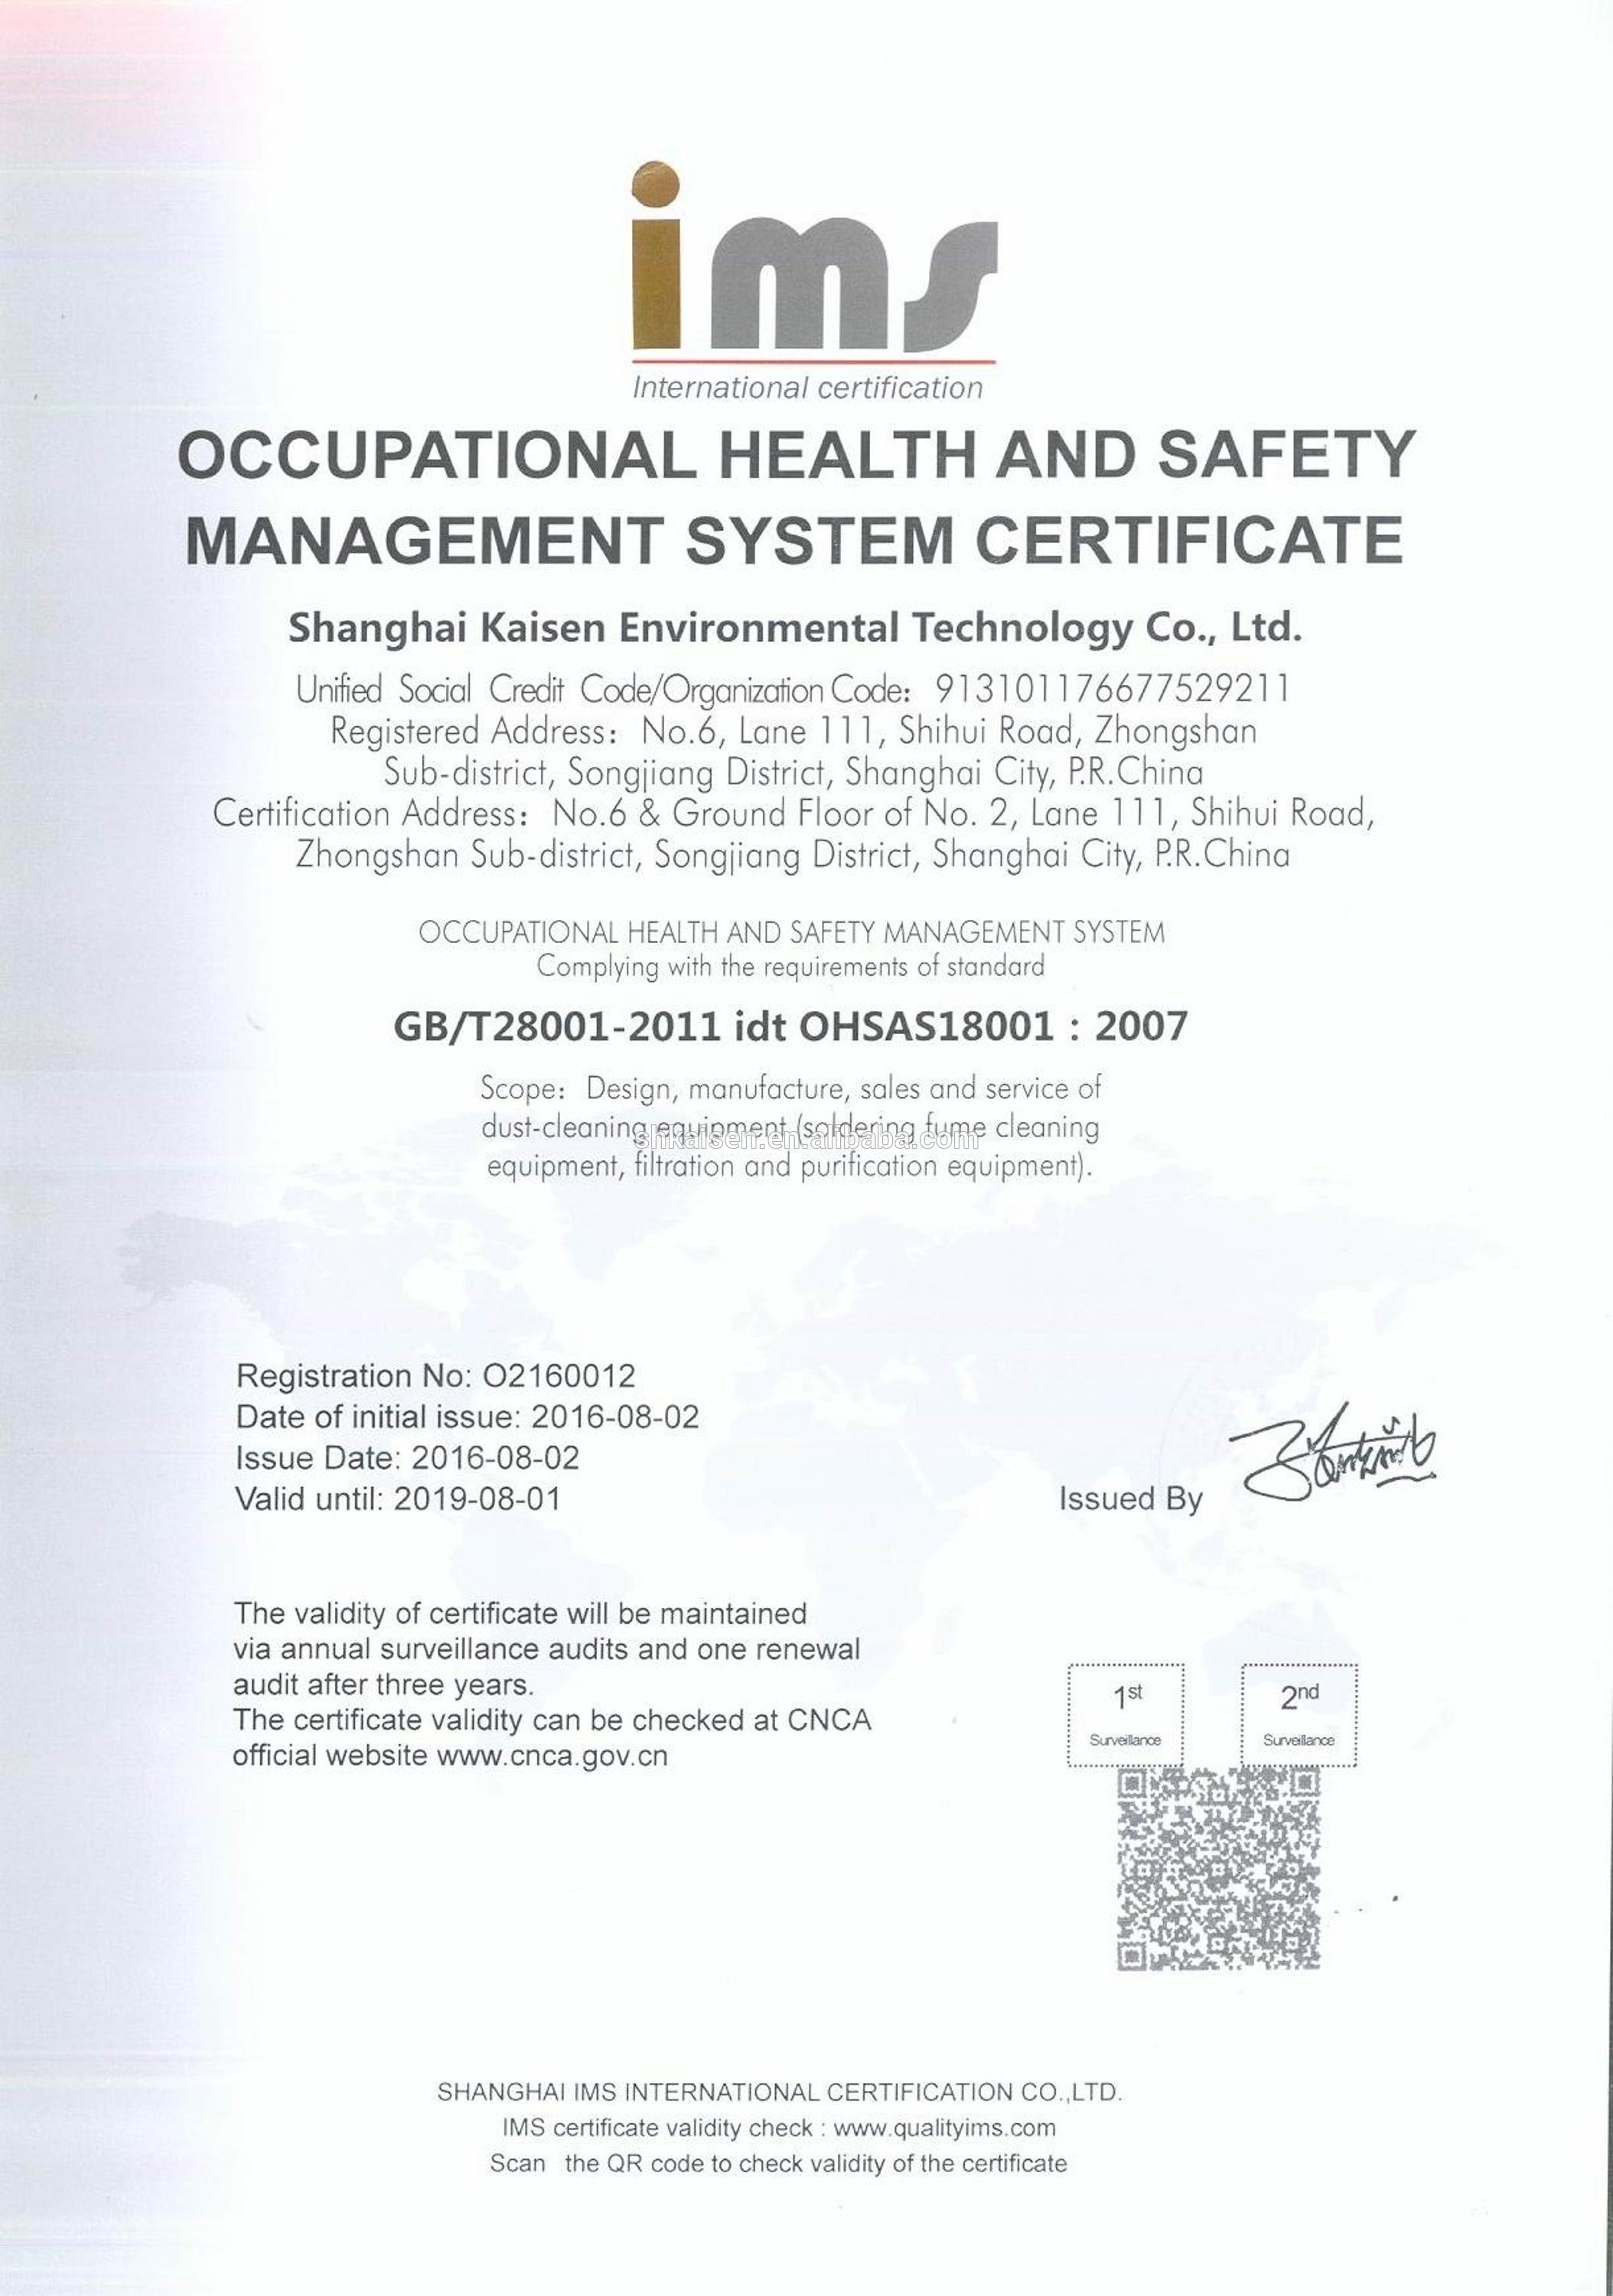 OHSAS18001 Certifcation.jpg